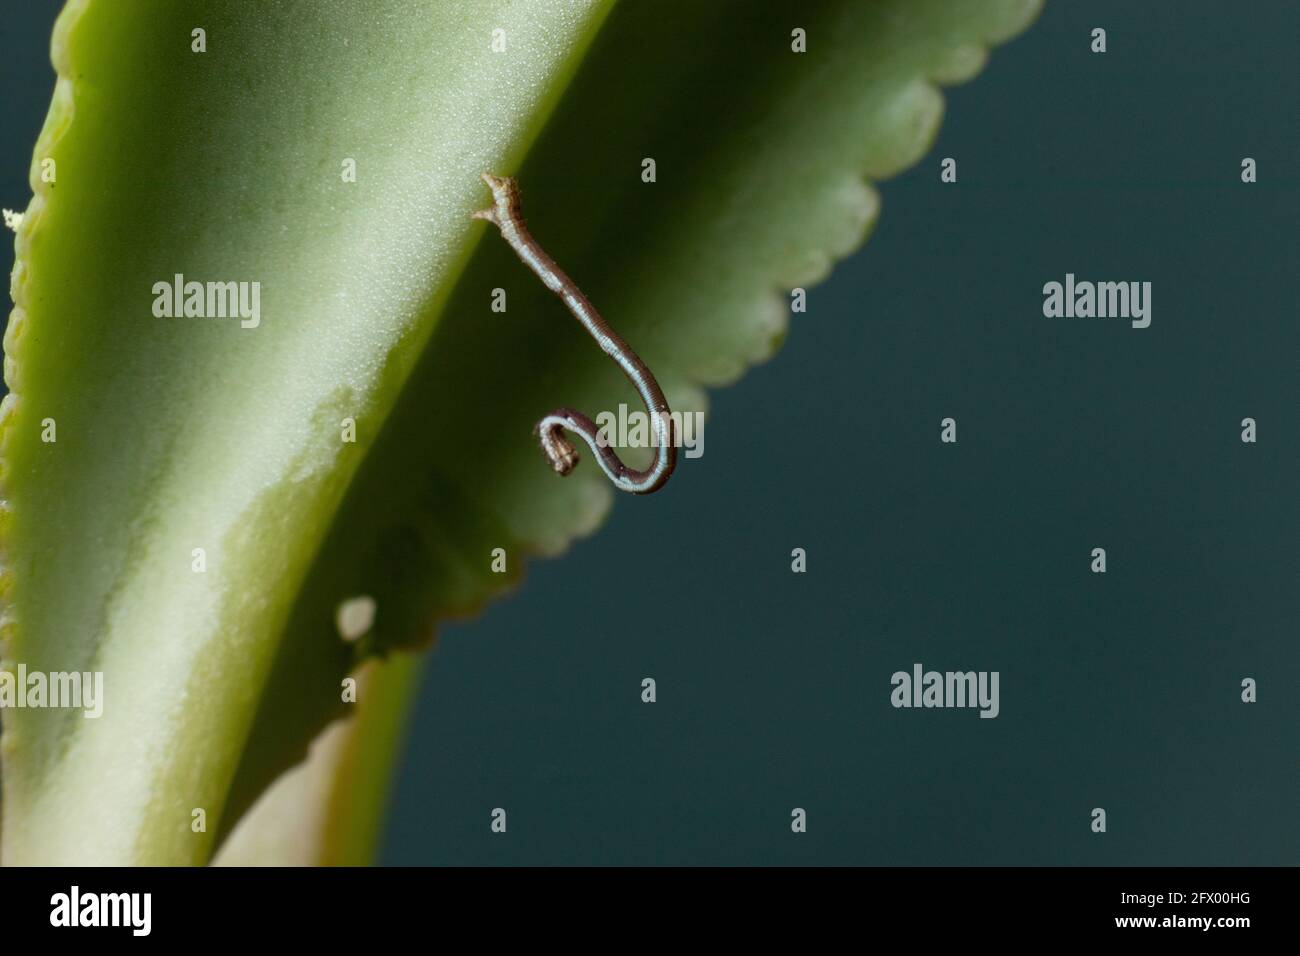 Geometrid caterpillar on a green leaf stock photo Stock Photo